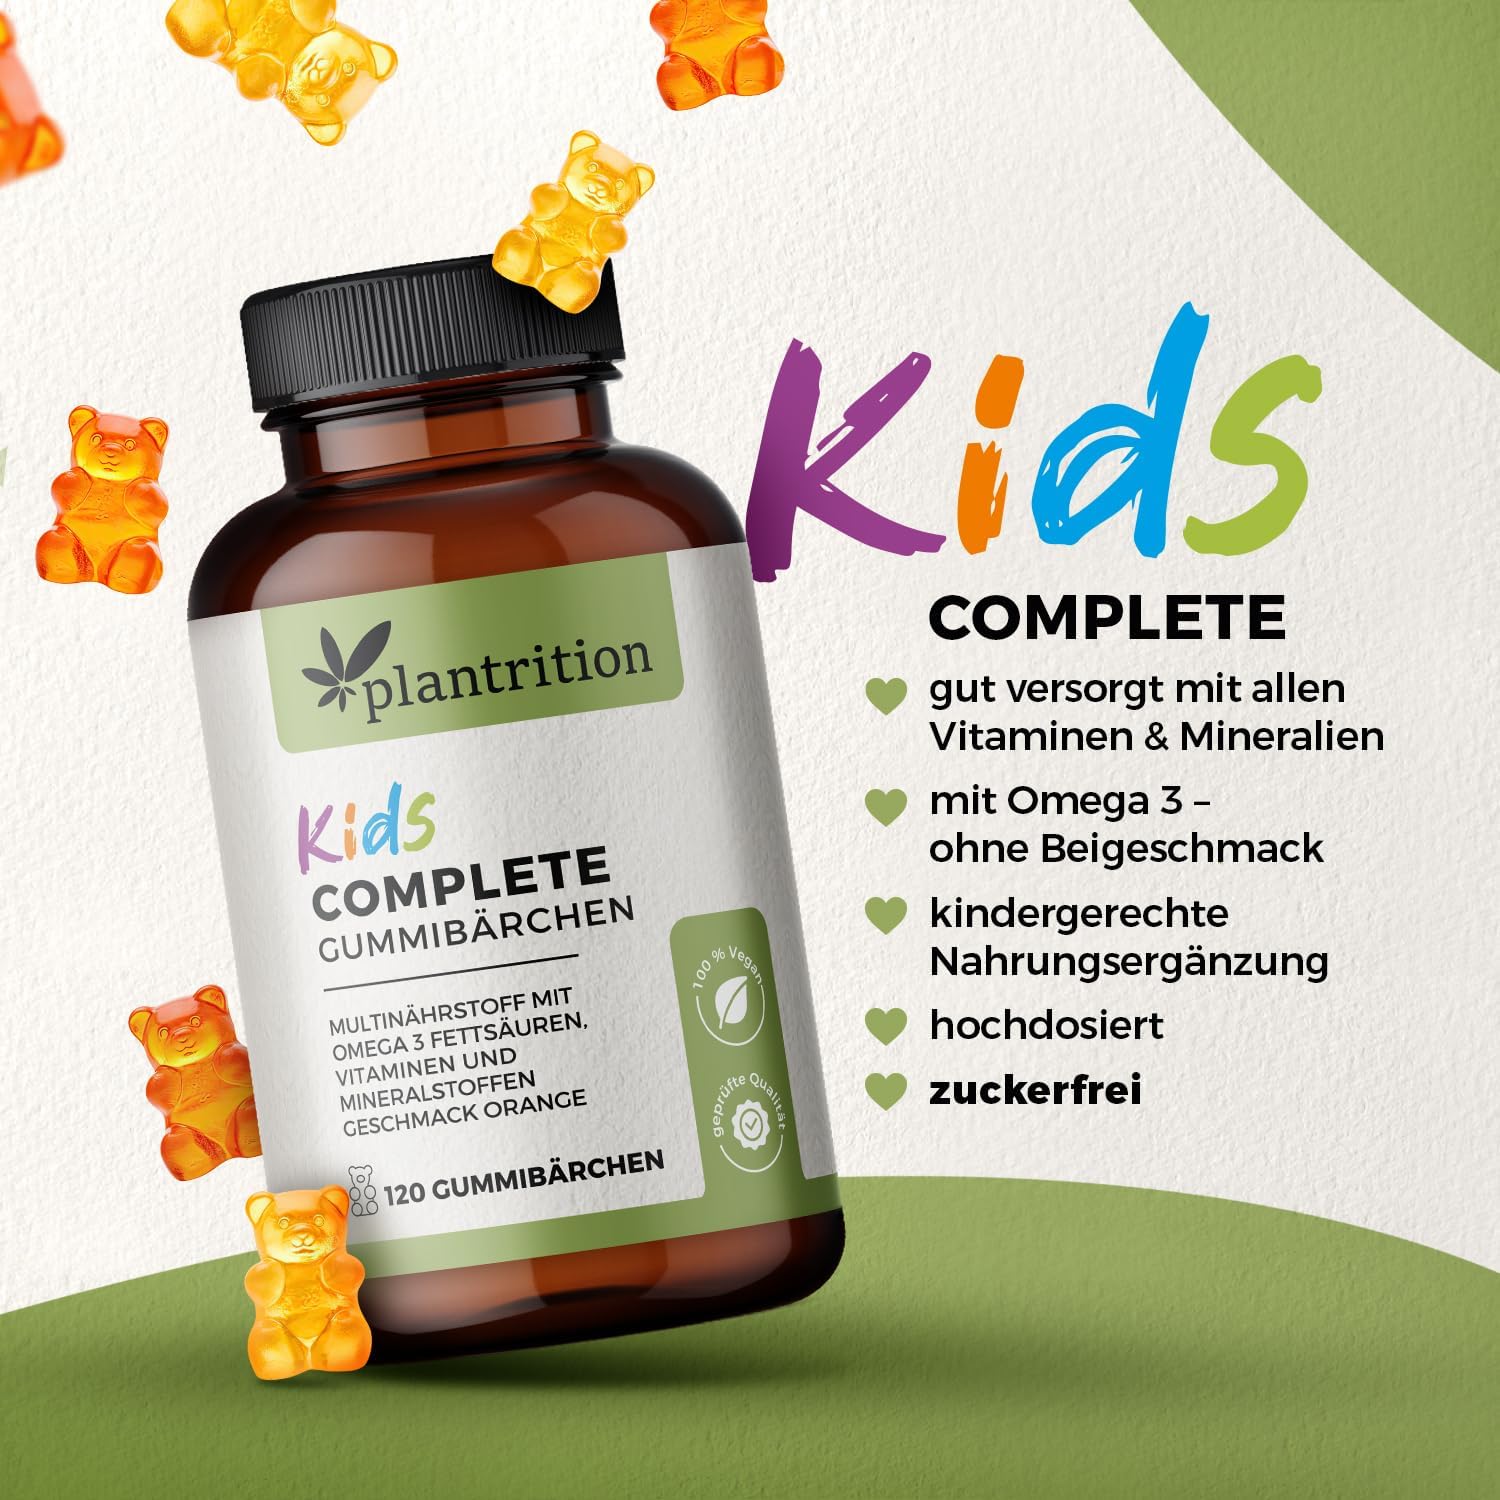 plantrition Kids Complete Multinährstoff Multivitamine